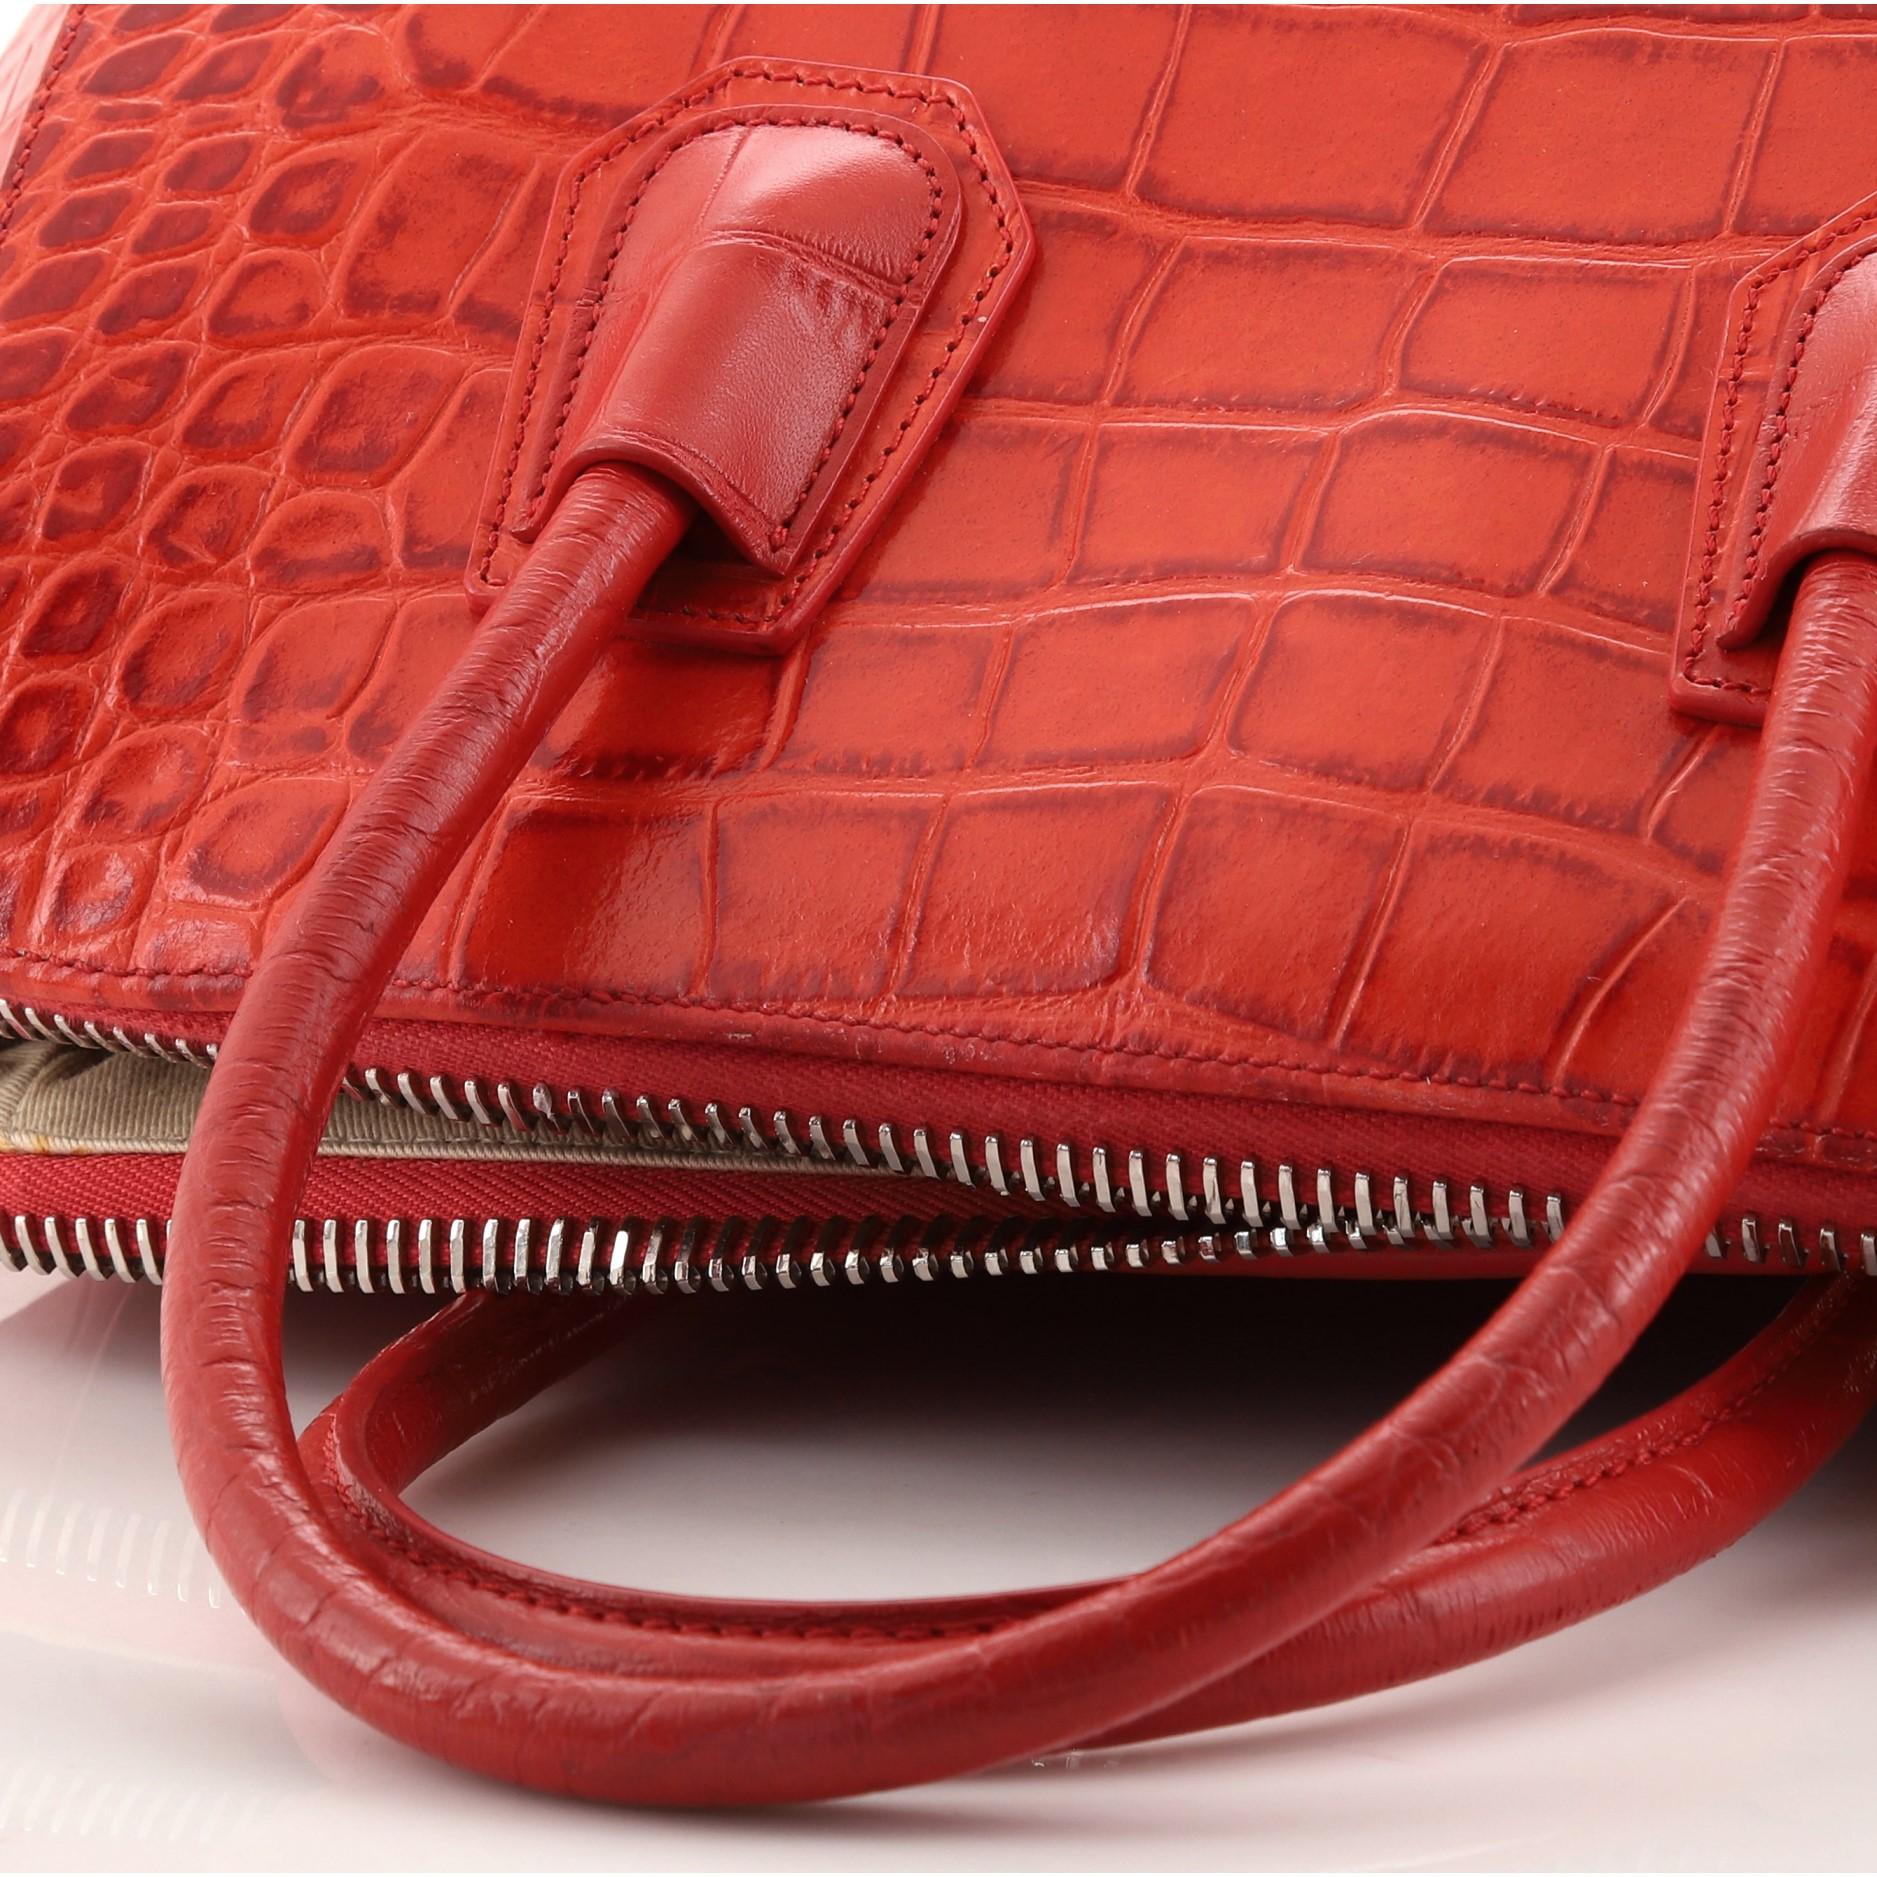 Red Givenchy Antigona Bag Crocodile Embossed Leather Medium